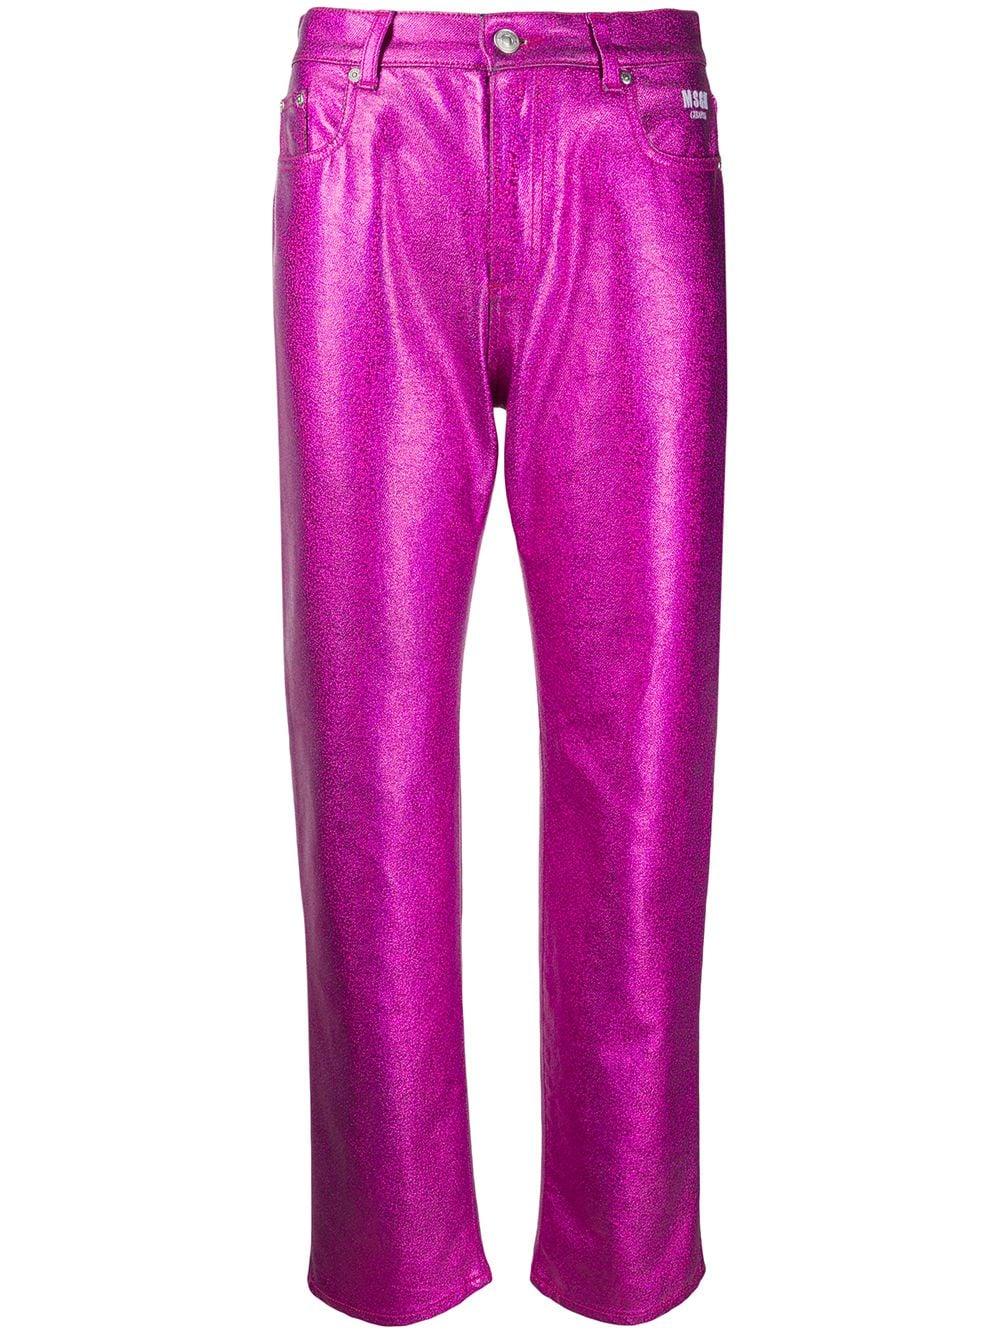 MSGM Denim Metallic Bootcut Jeans in Pink - Lyst